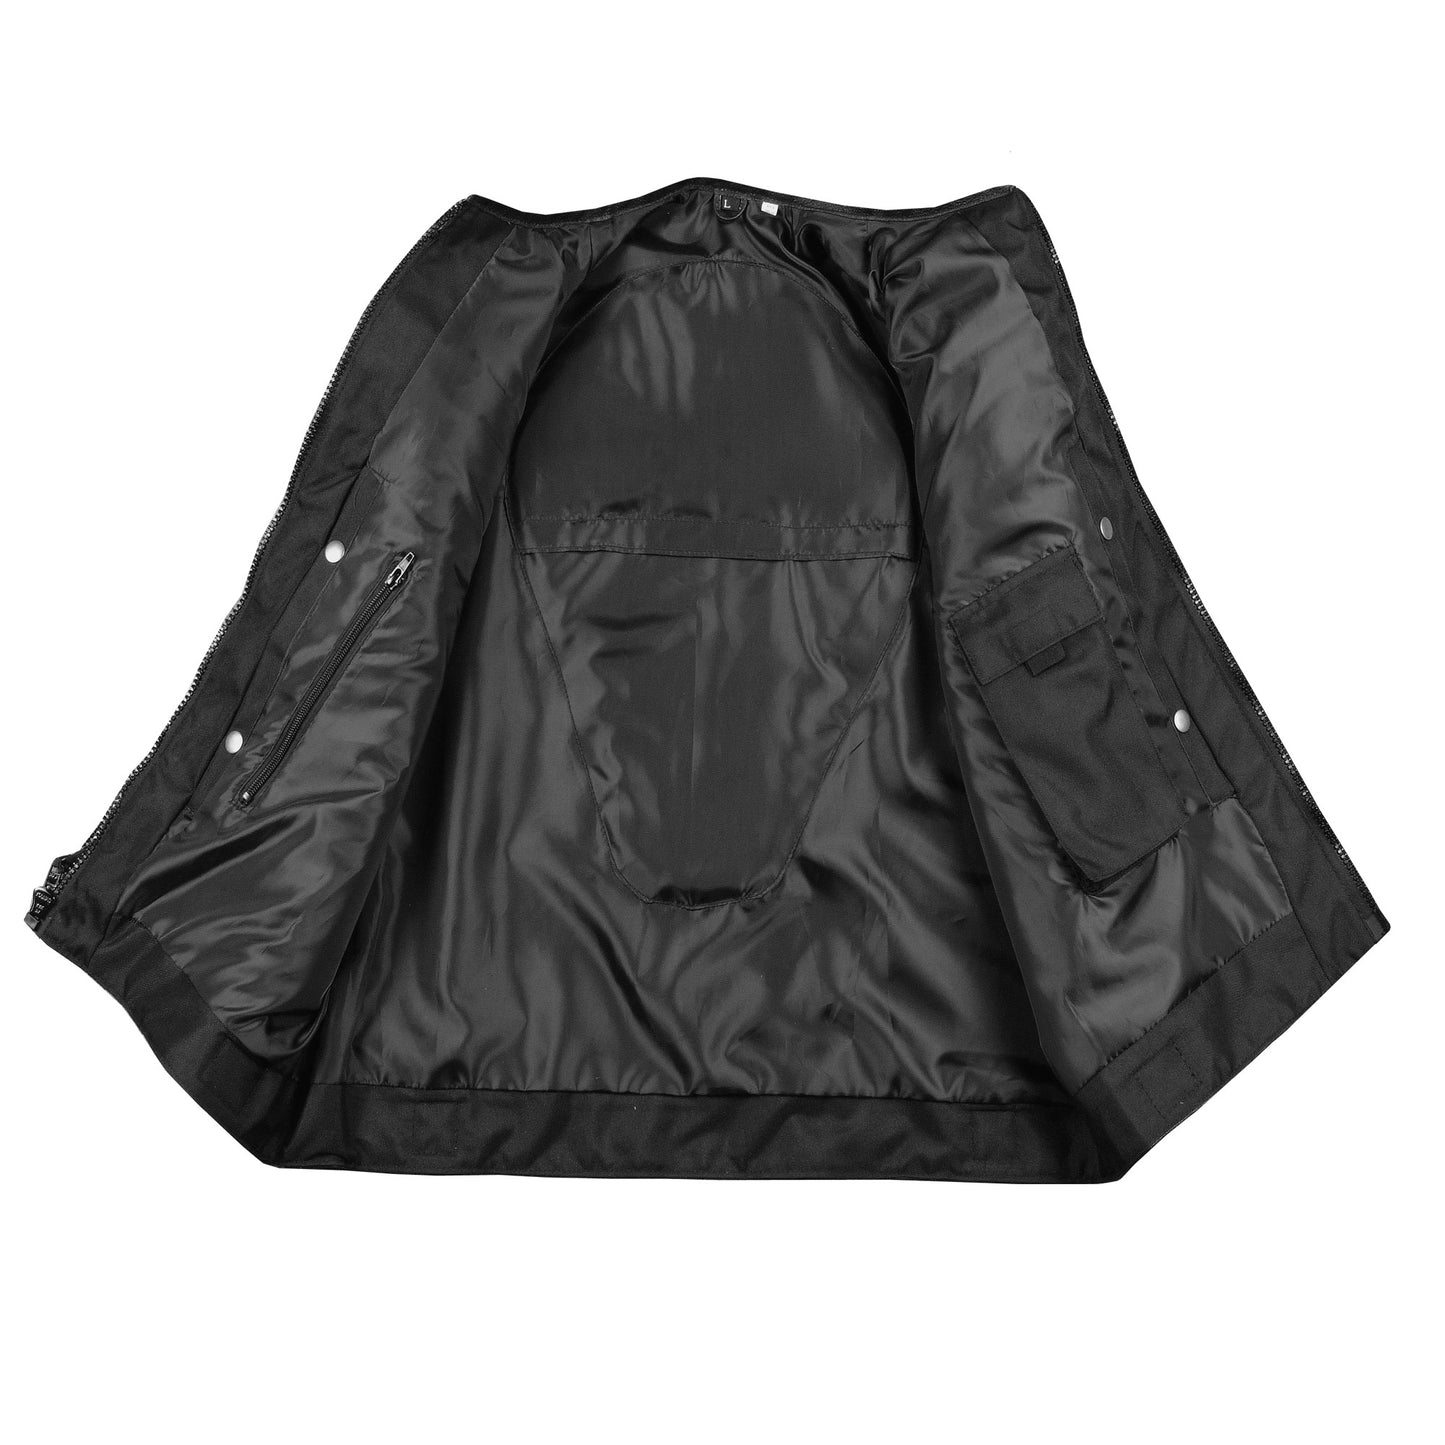 Men's Armor Motorcycle Biker Vest Conceal Carry Cowhide Leather